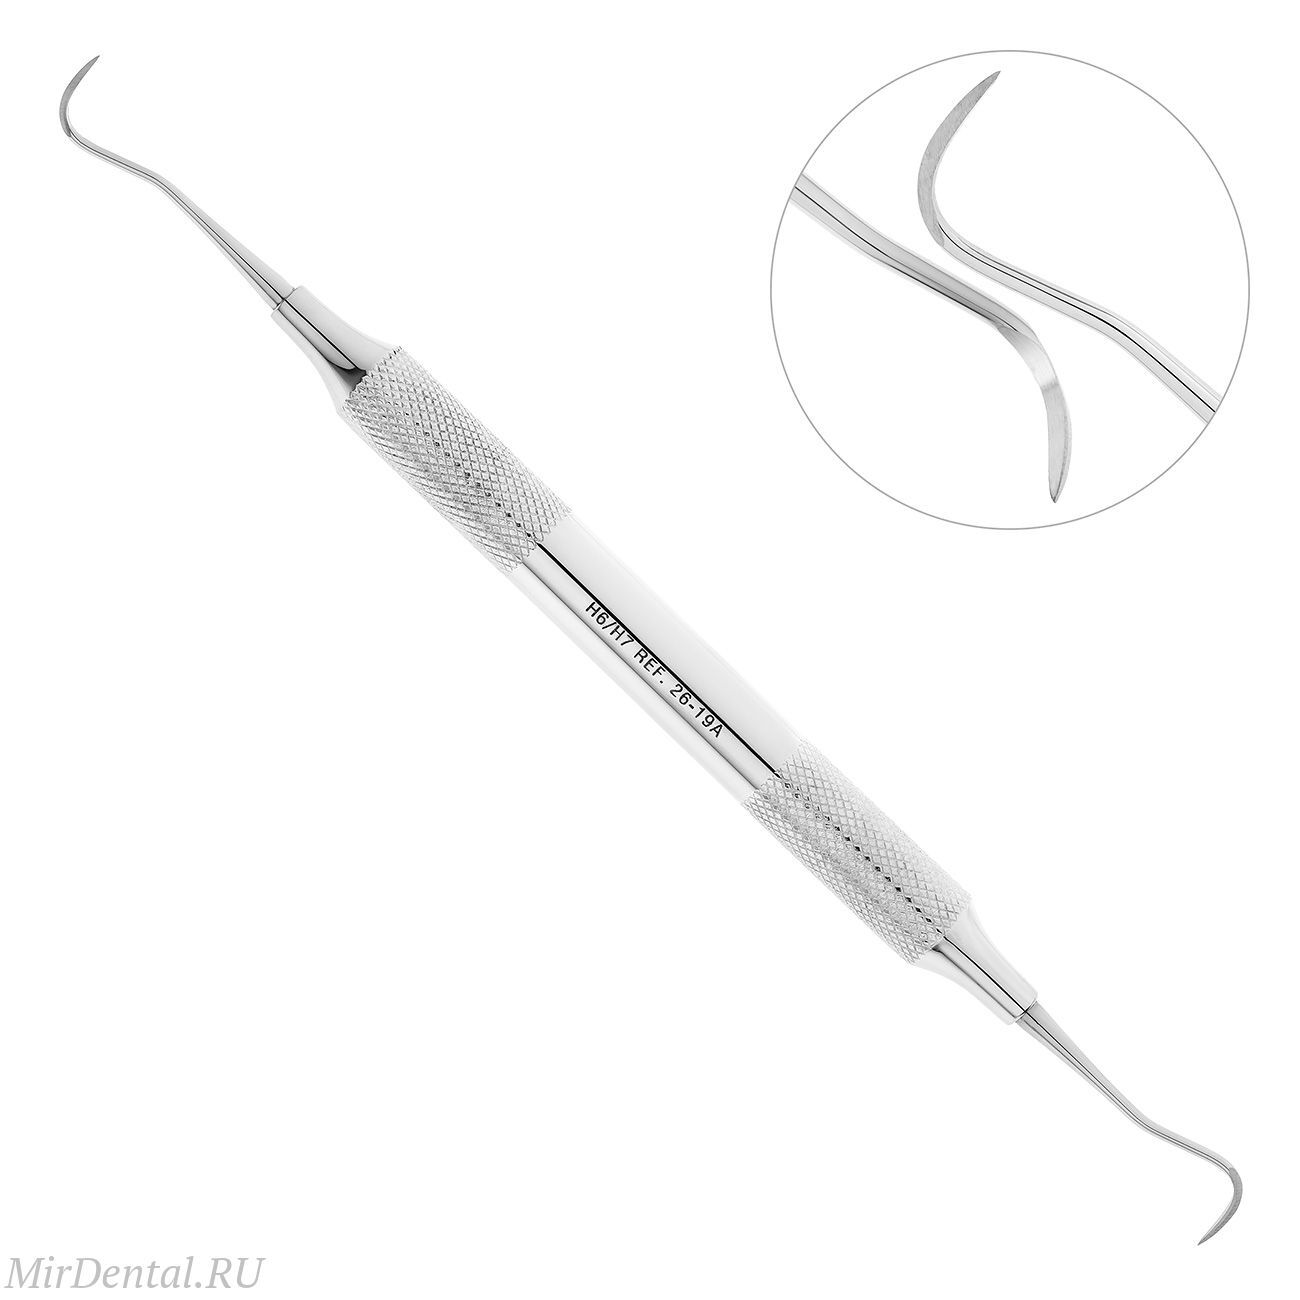 Скейлер парадонтологический, форма H6/H7, ручка CLASSIC, диаметр 10 мм, 26-19A*